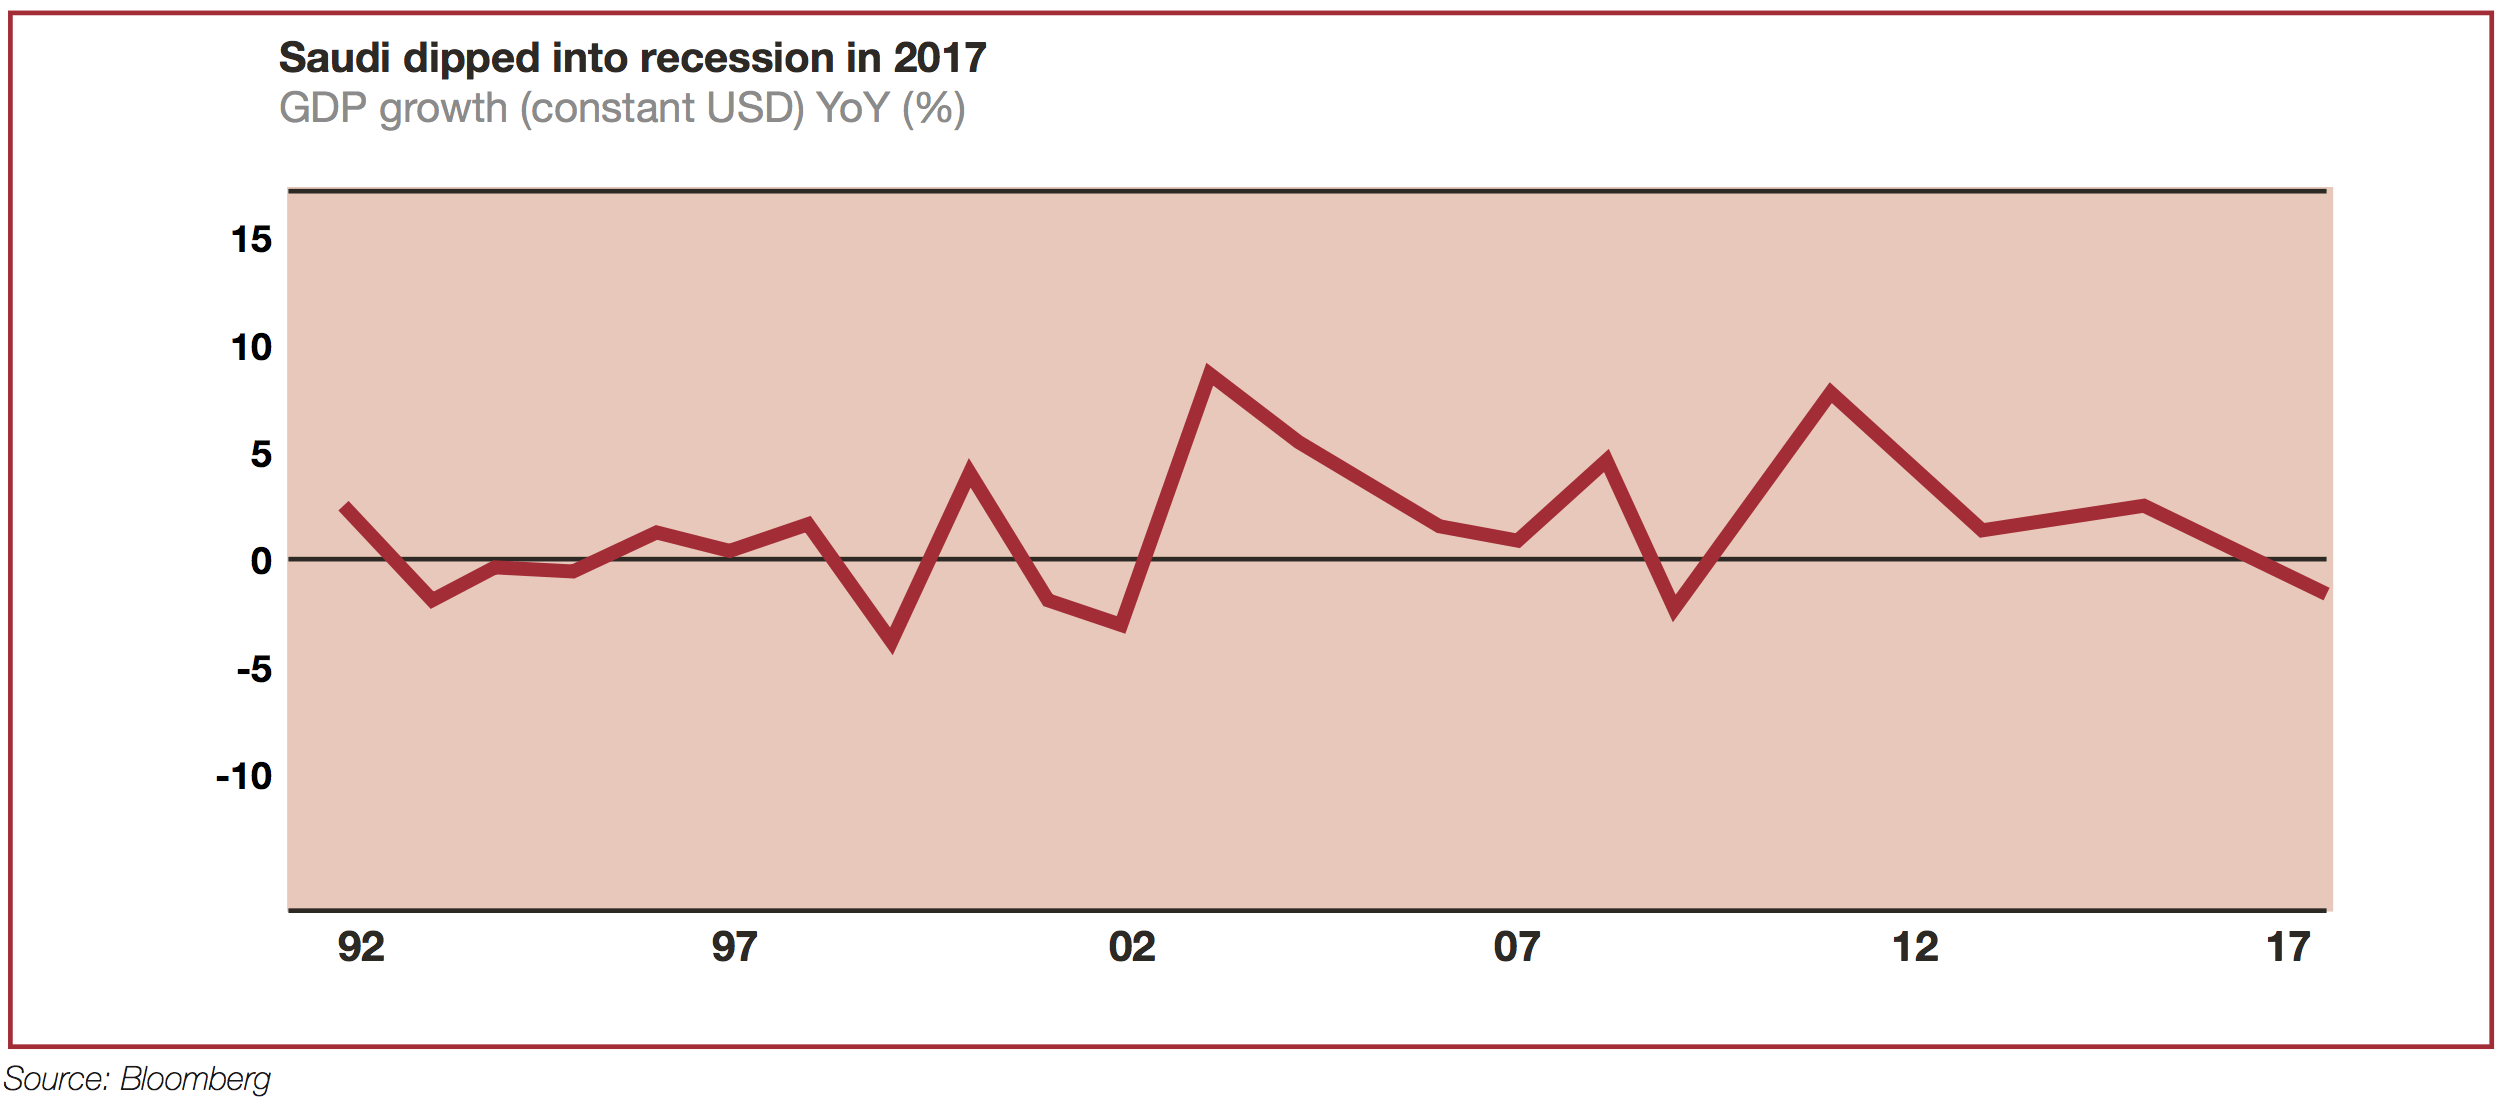 Saudi dipped into recession in 2017